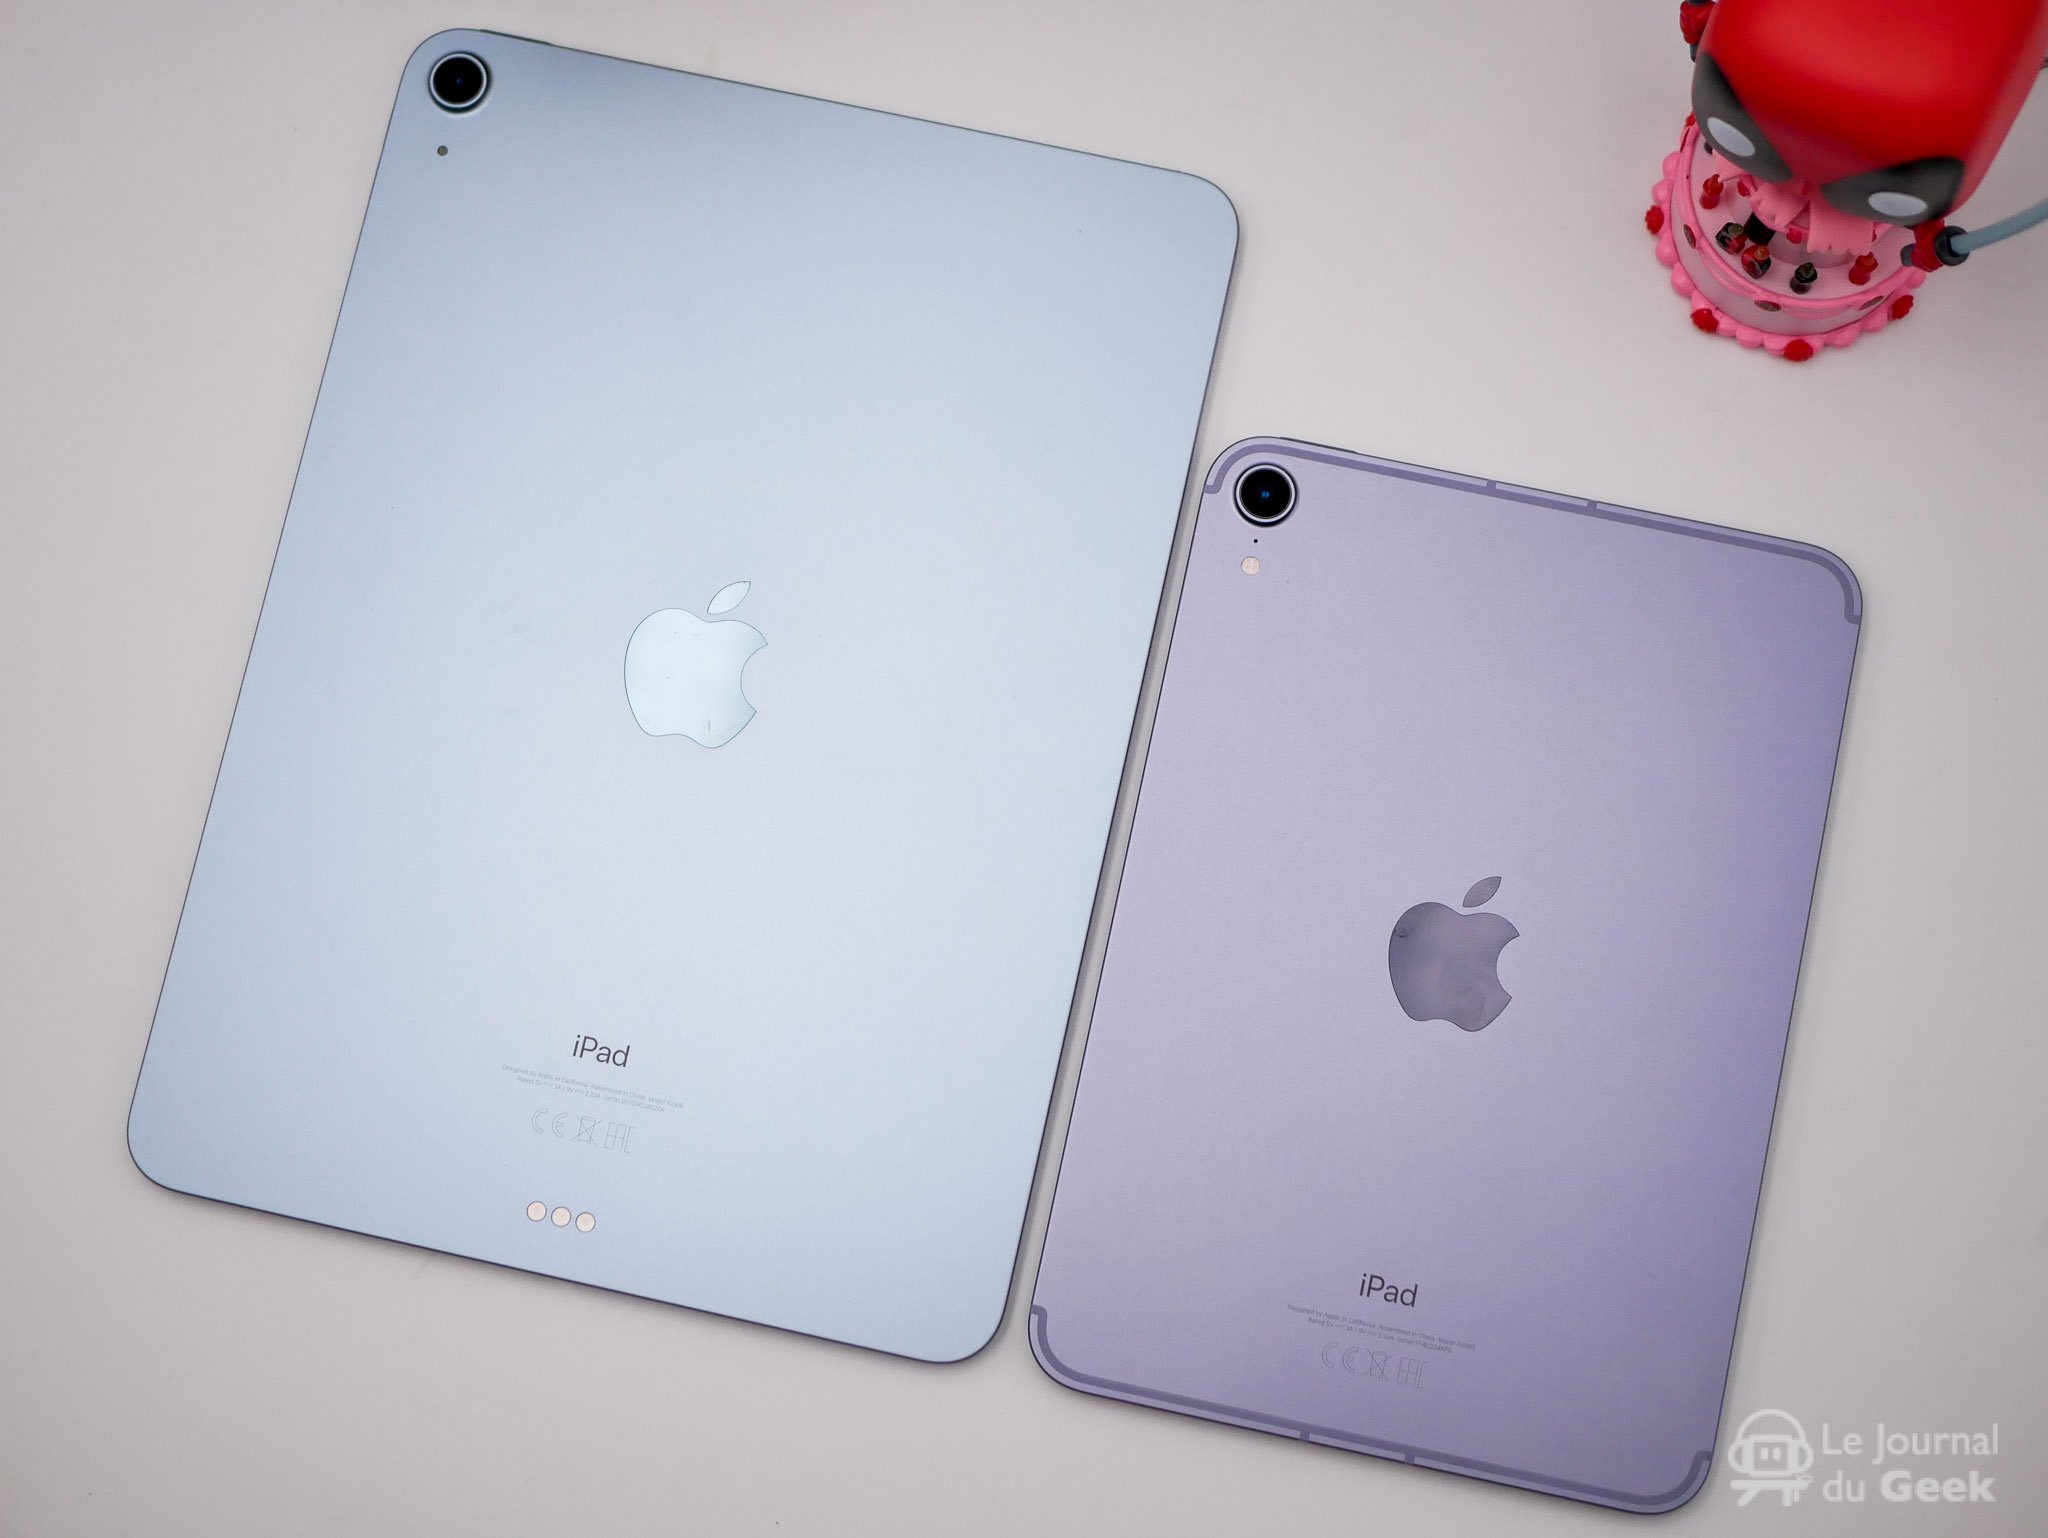 Apple iPad 2022 Wi-Fi + Cellular 256Go rosé pas cher